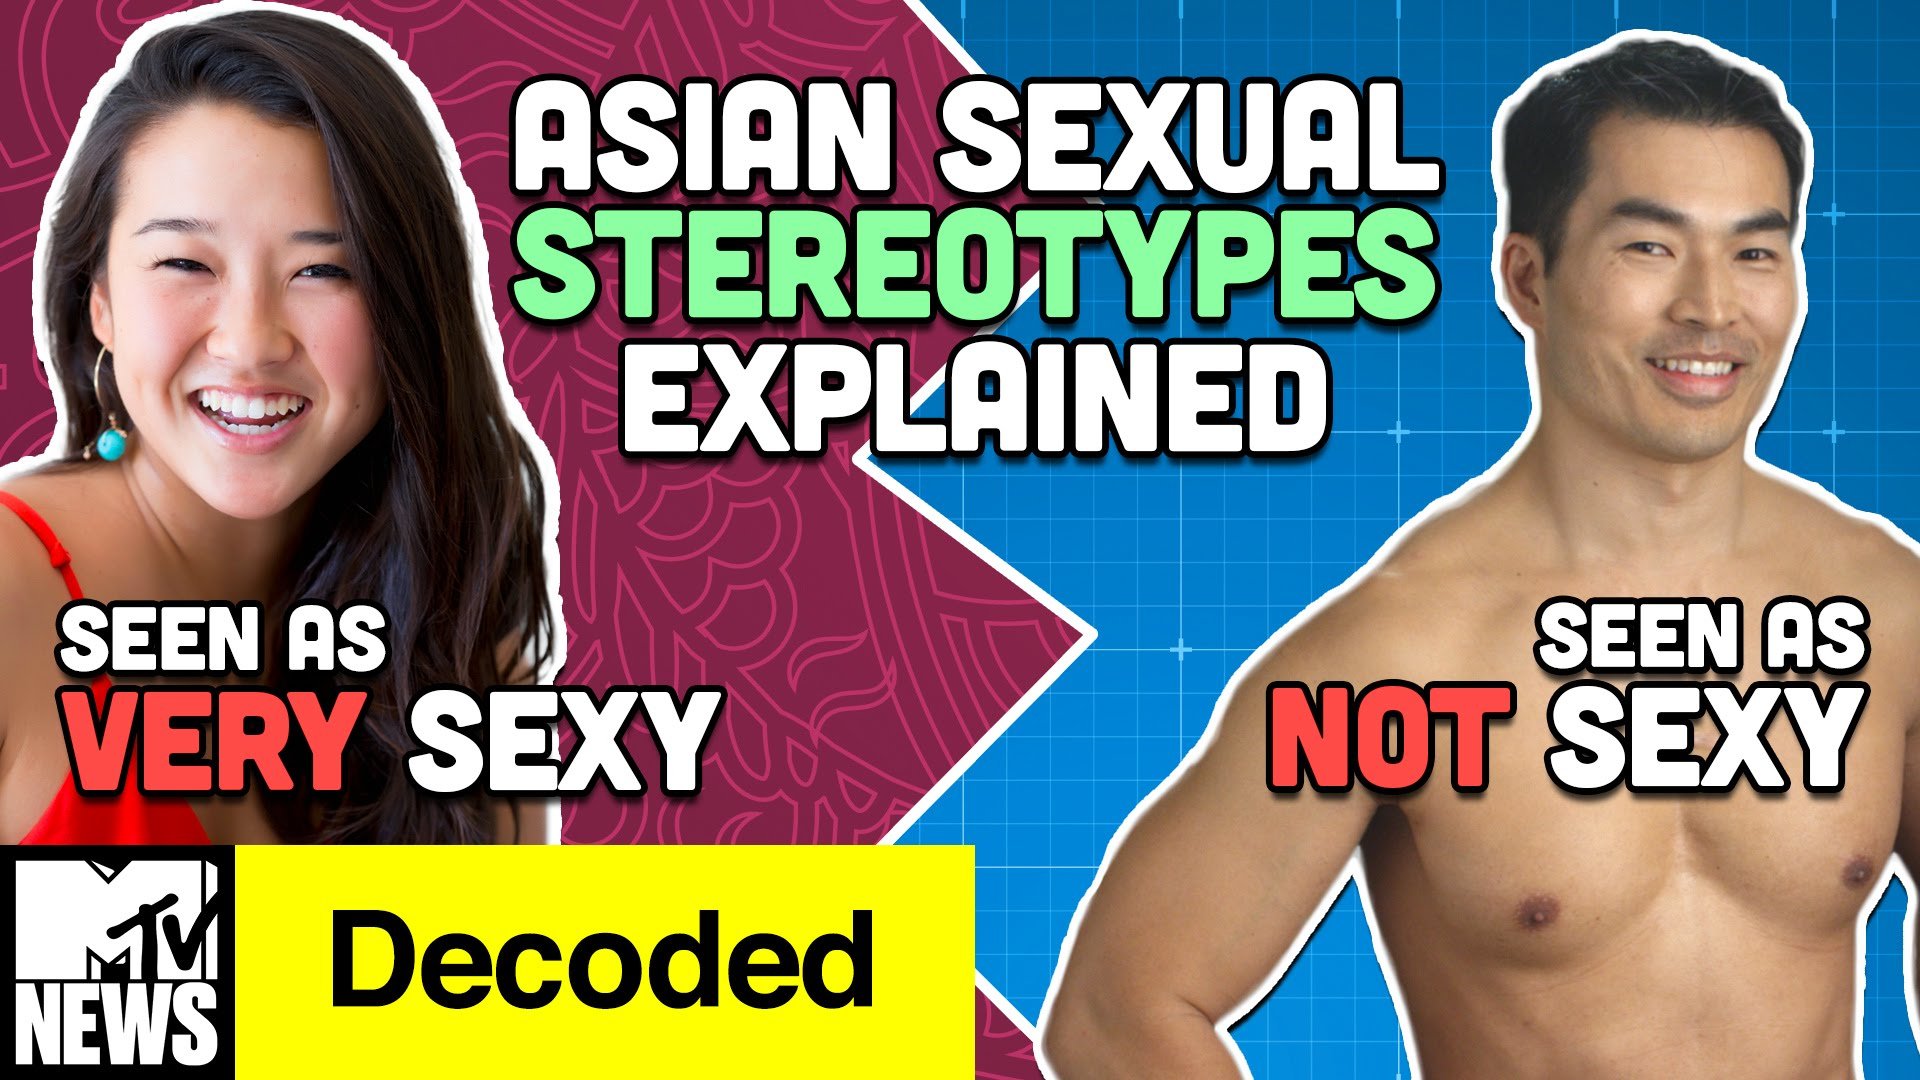 Asian man stereotype